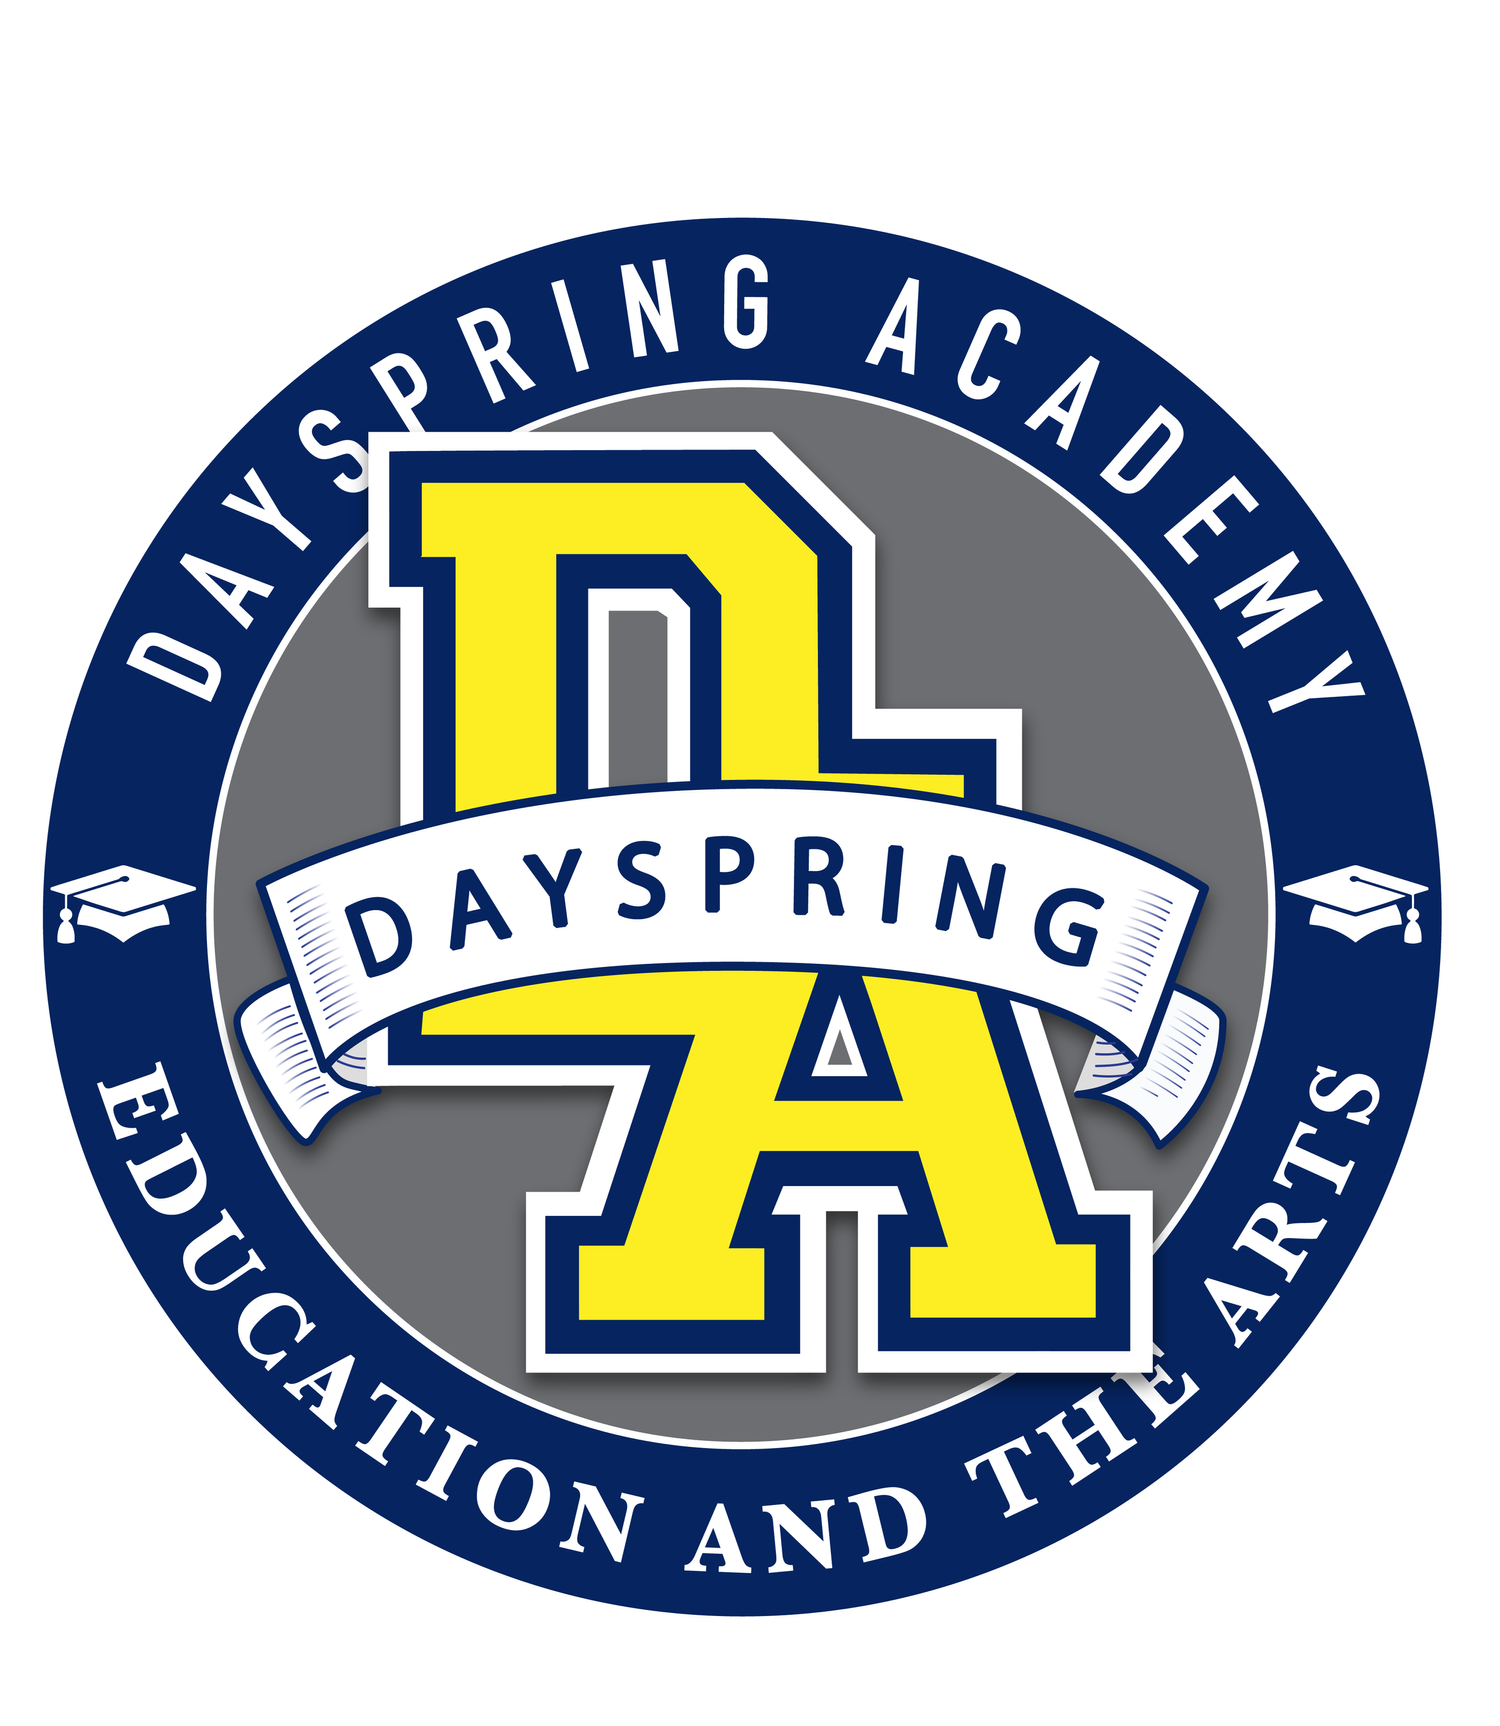 Dayspring Academy